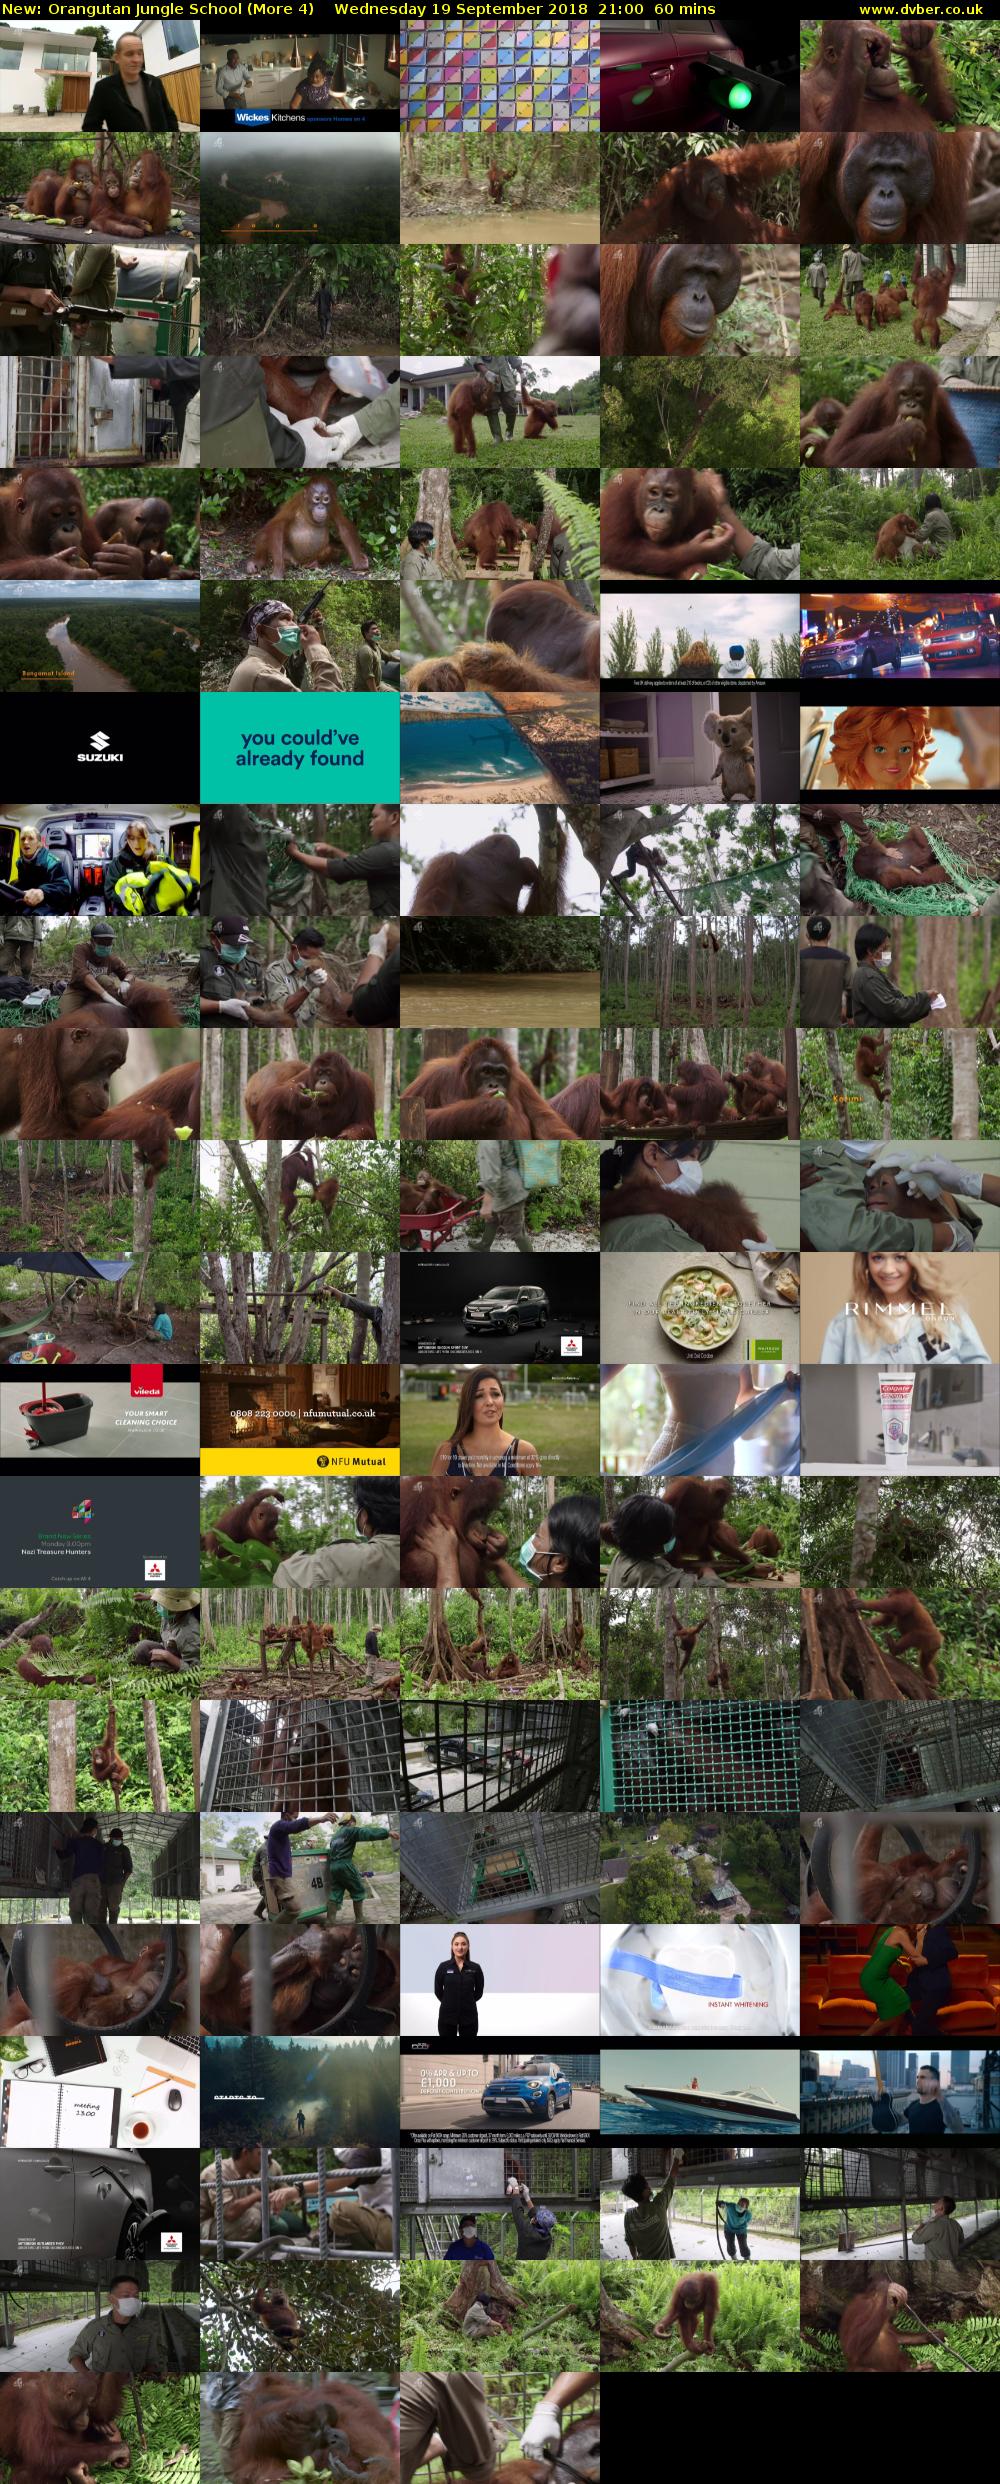 Orangutan Jungle School (More 4) Wednesday 19 September 2018 21:00 - 22:00